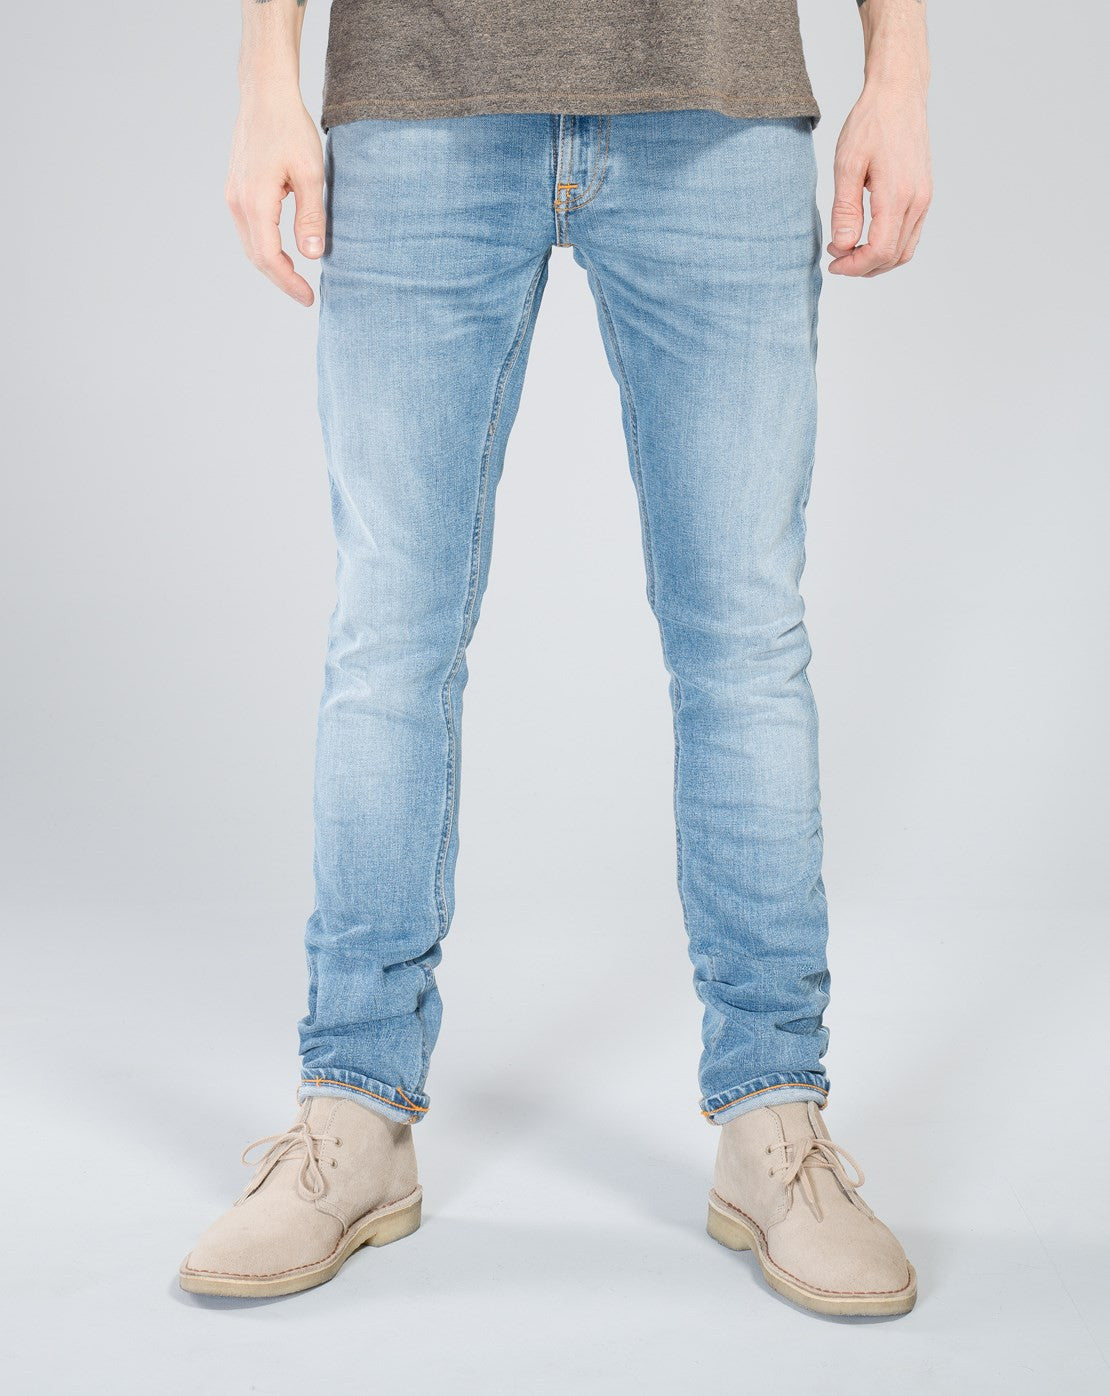 Nudie Jeans Tight Long John Saltwater Indigo - Supply Co